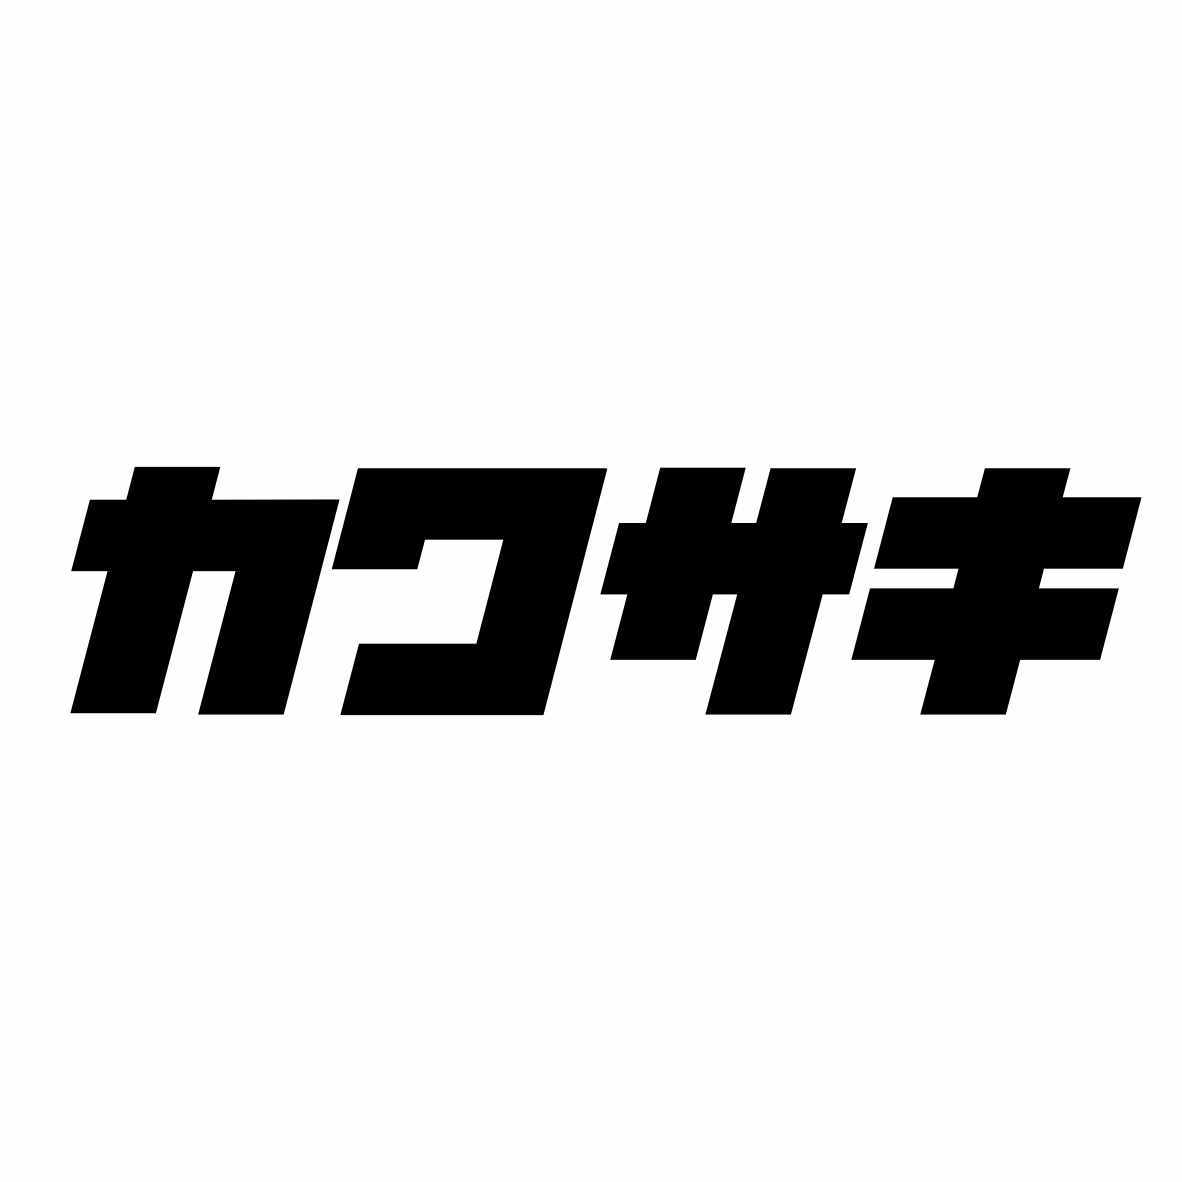 S. 198 レトロ調文字ステッカー【カワサキ】_画像1